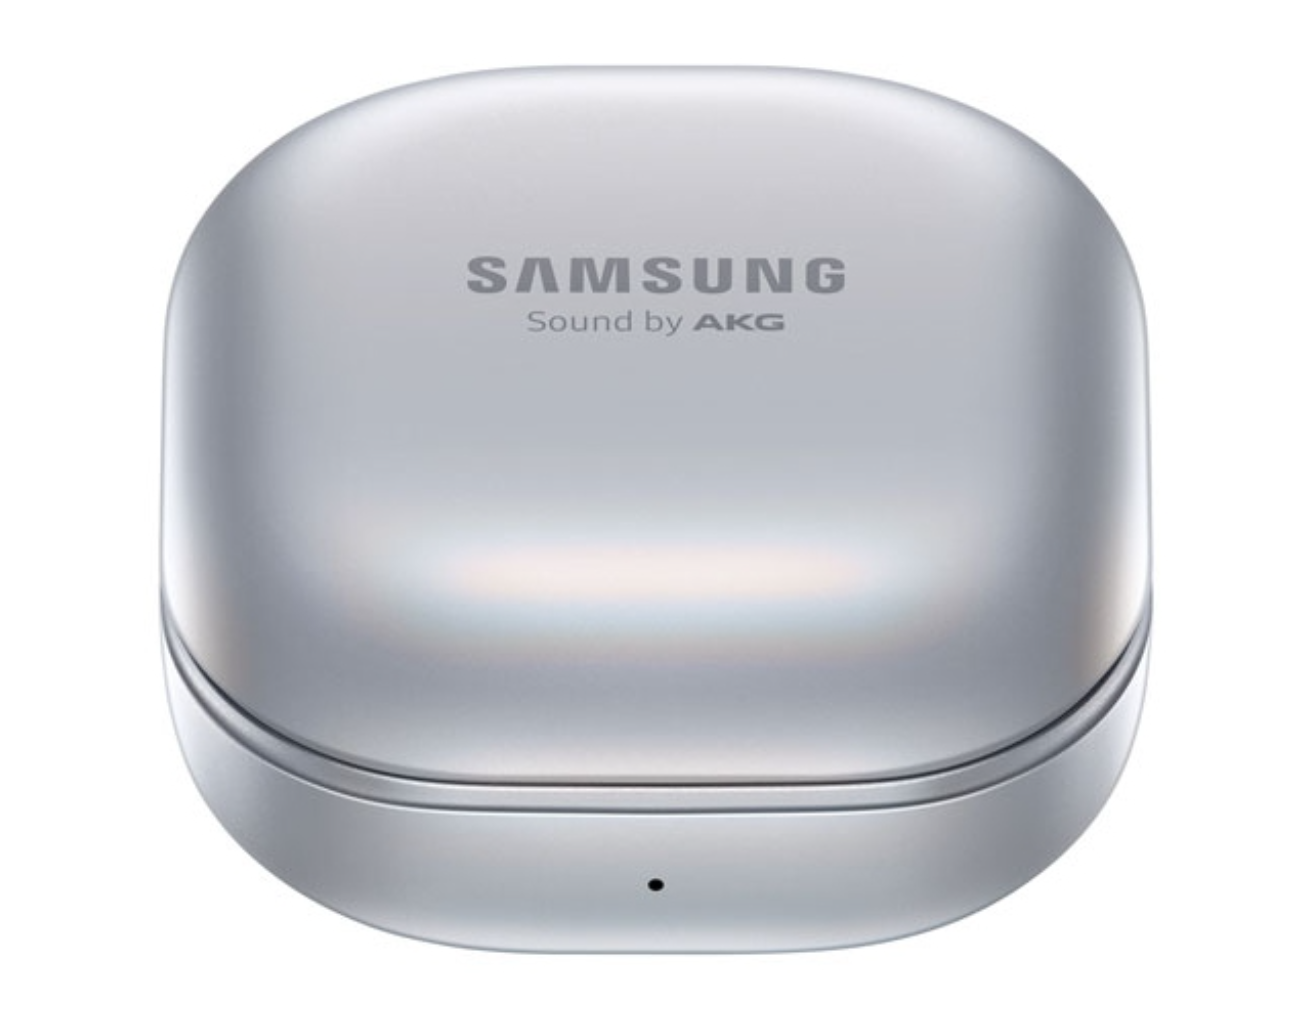 Samsung Galaxy Buds Pro - Argent Fantôme